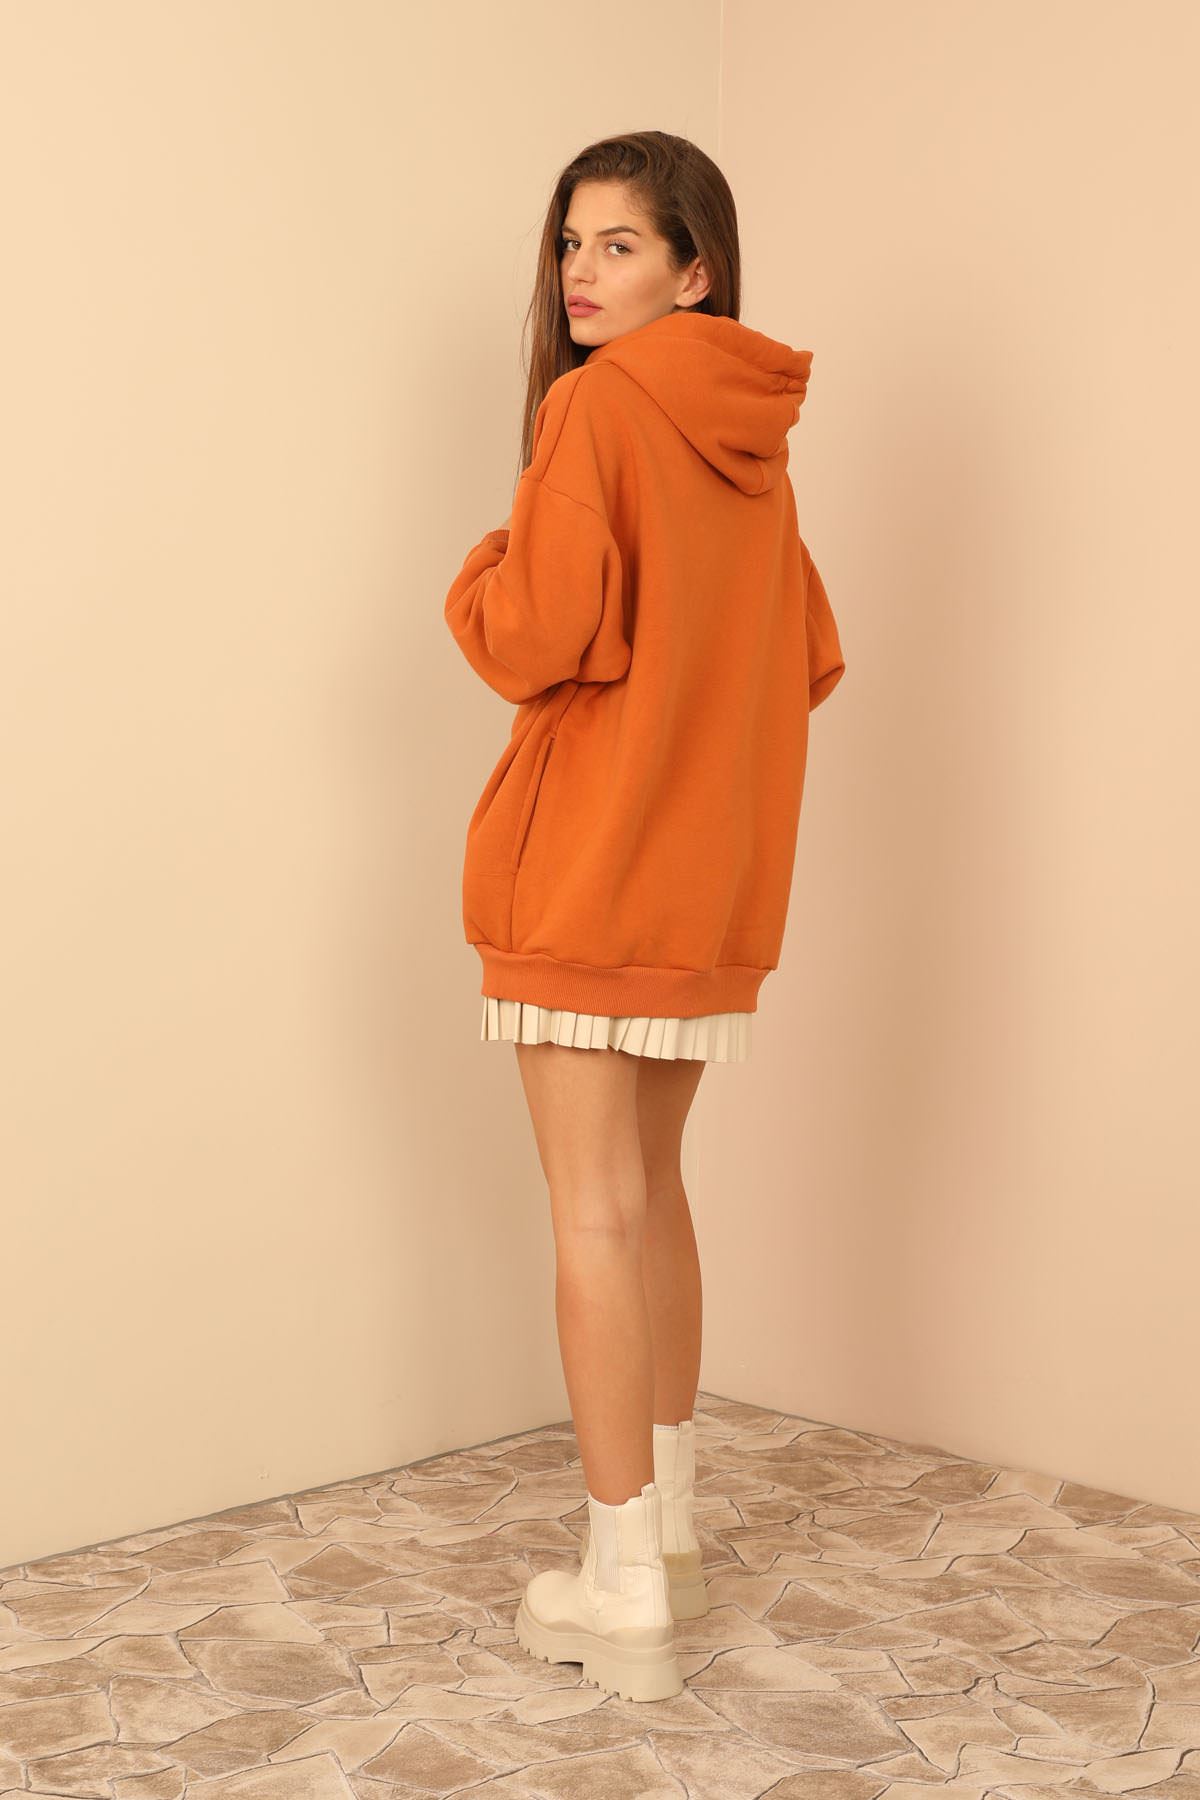 Third Knit With Wool İnside Fabric Hooded Hip Height Oversize Women Sweatshirt - Cinnamon 